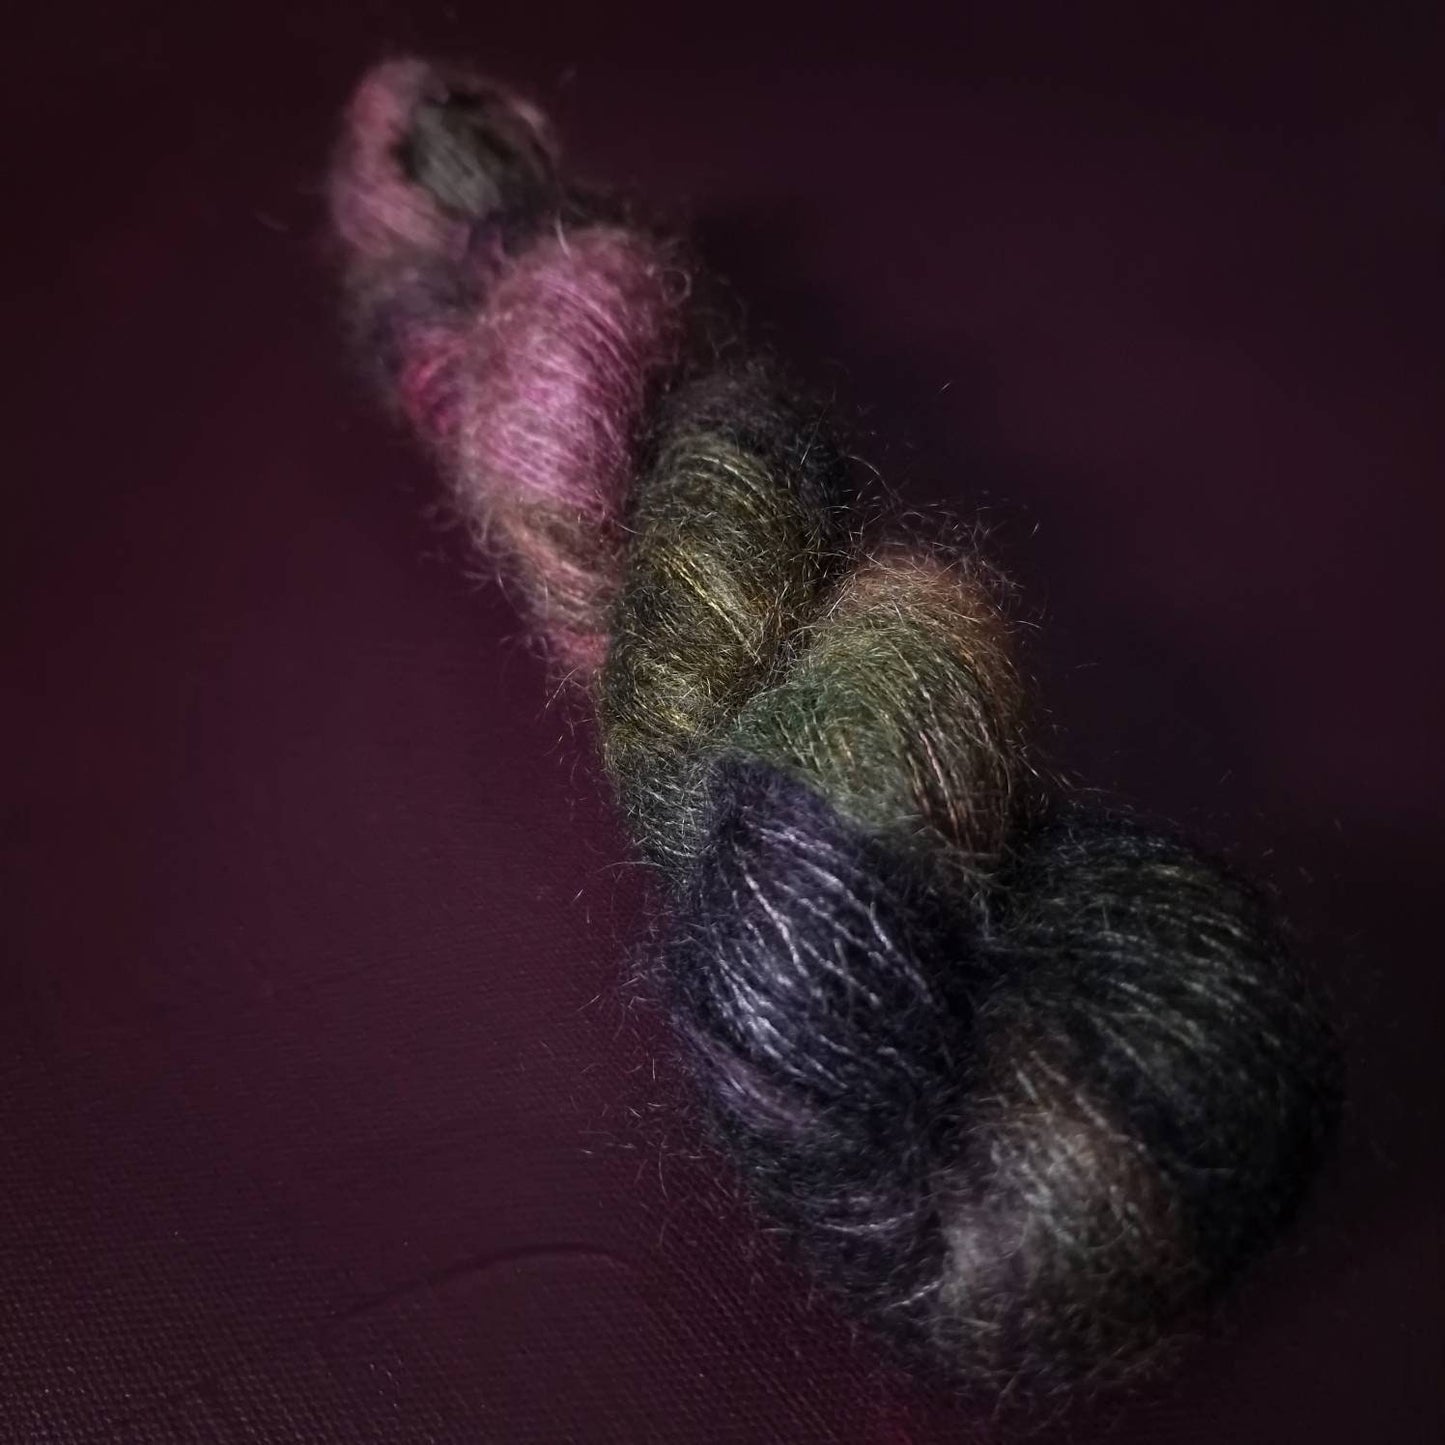 Hand dyed yarn ~ The Clown*** Dyed to order ~ Sock, Merino Singles, DK, Aran, Mohair Silk